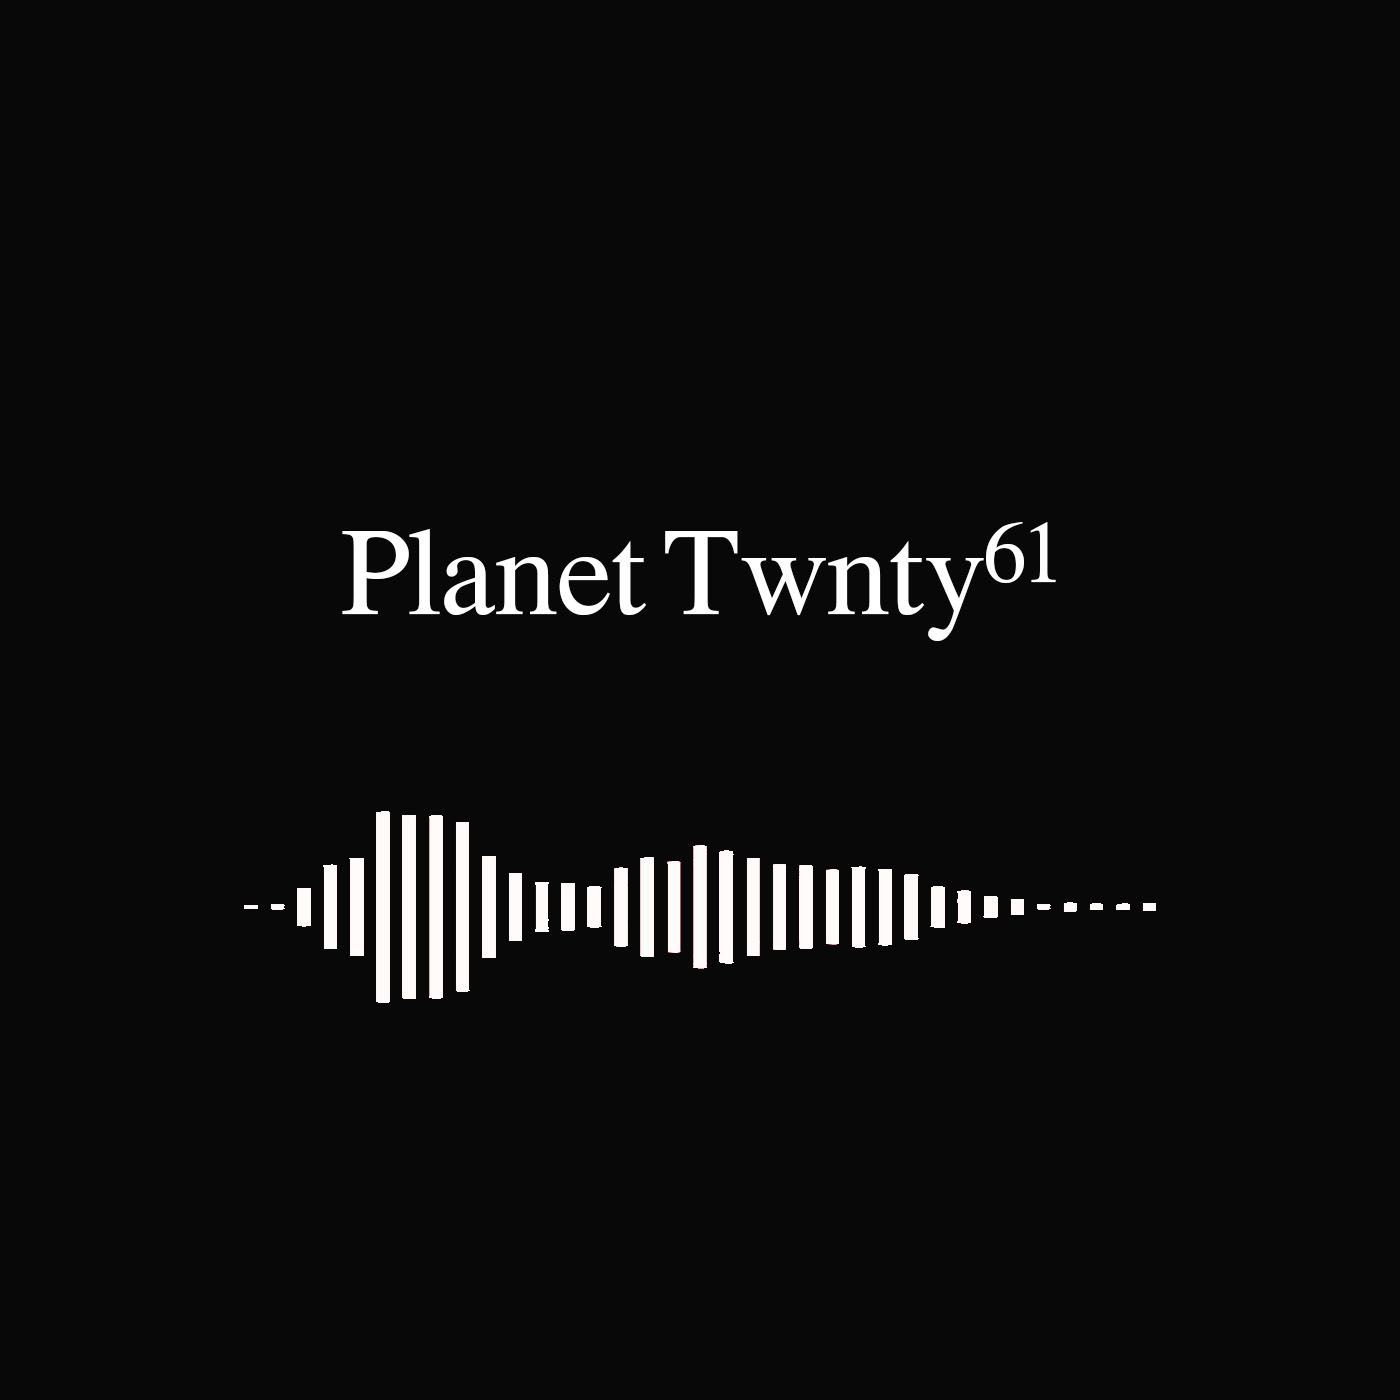 Planet Twnty61